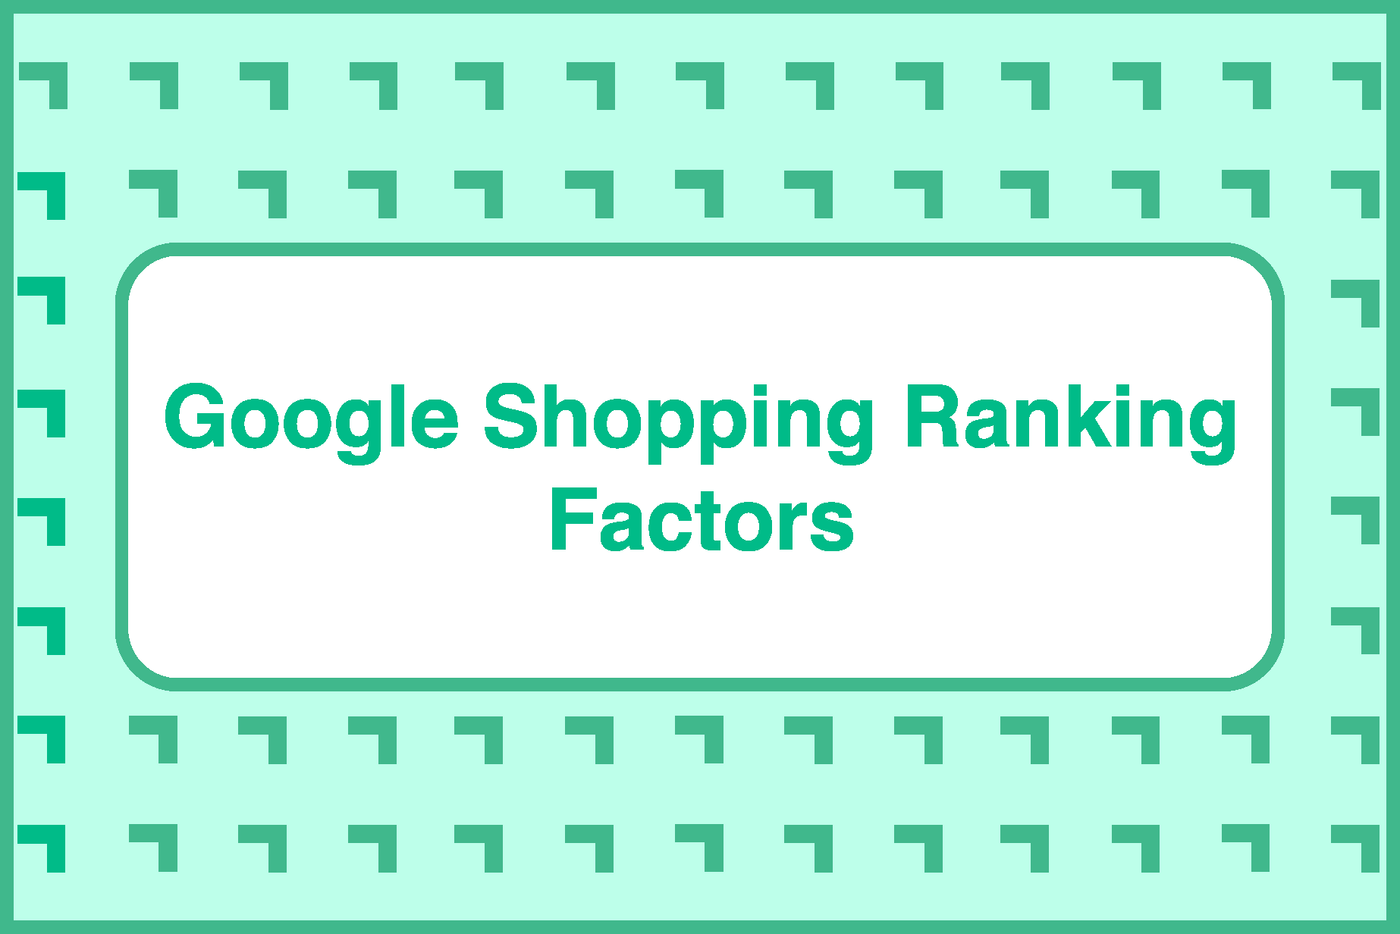 Google Shopping Ranking Factors